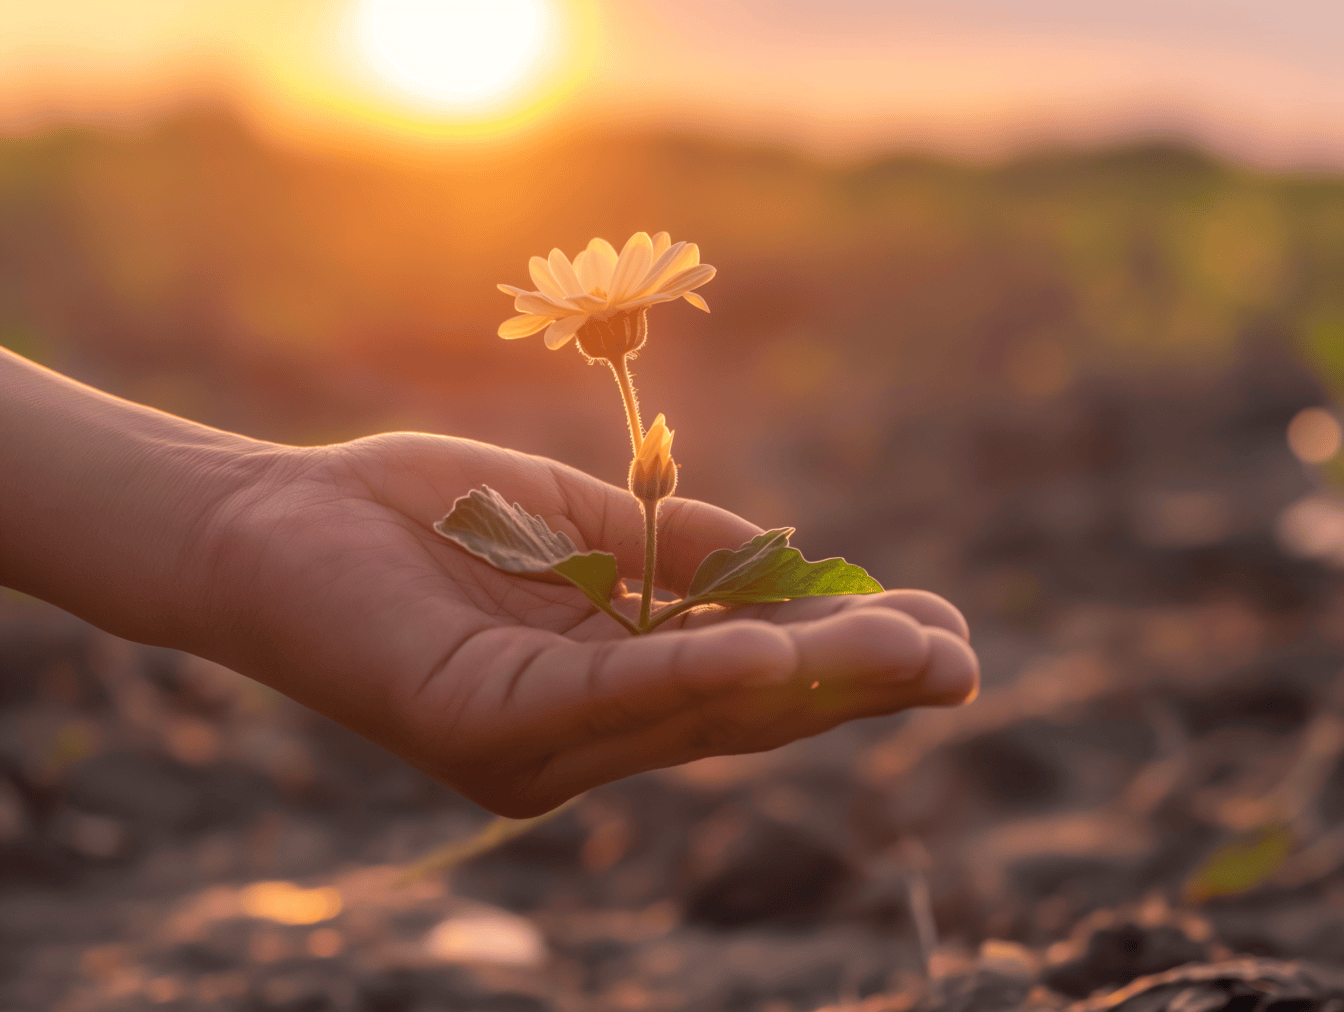 En blomma i handflatan med svagt solljus vid solnedgången som bakgrund